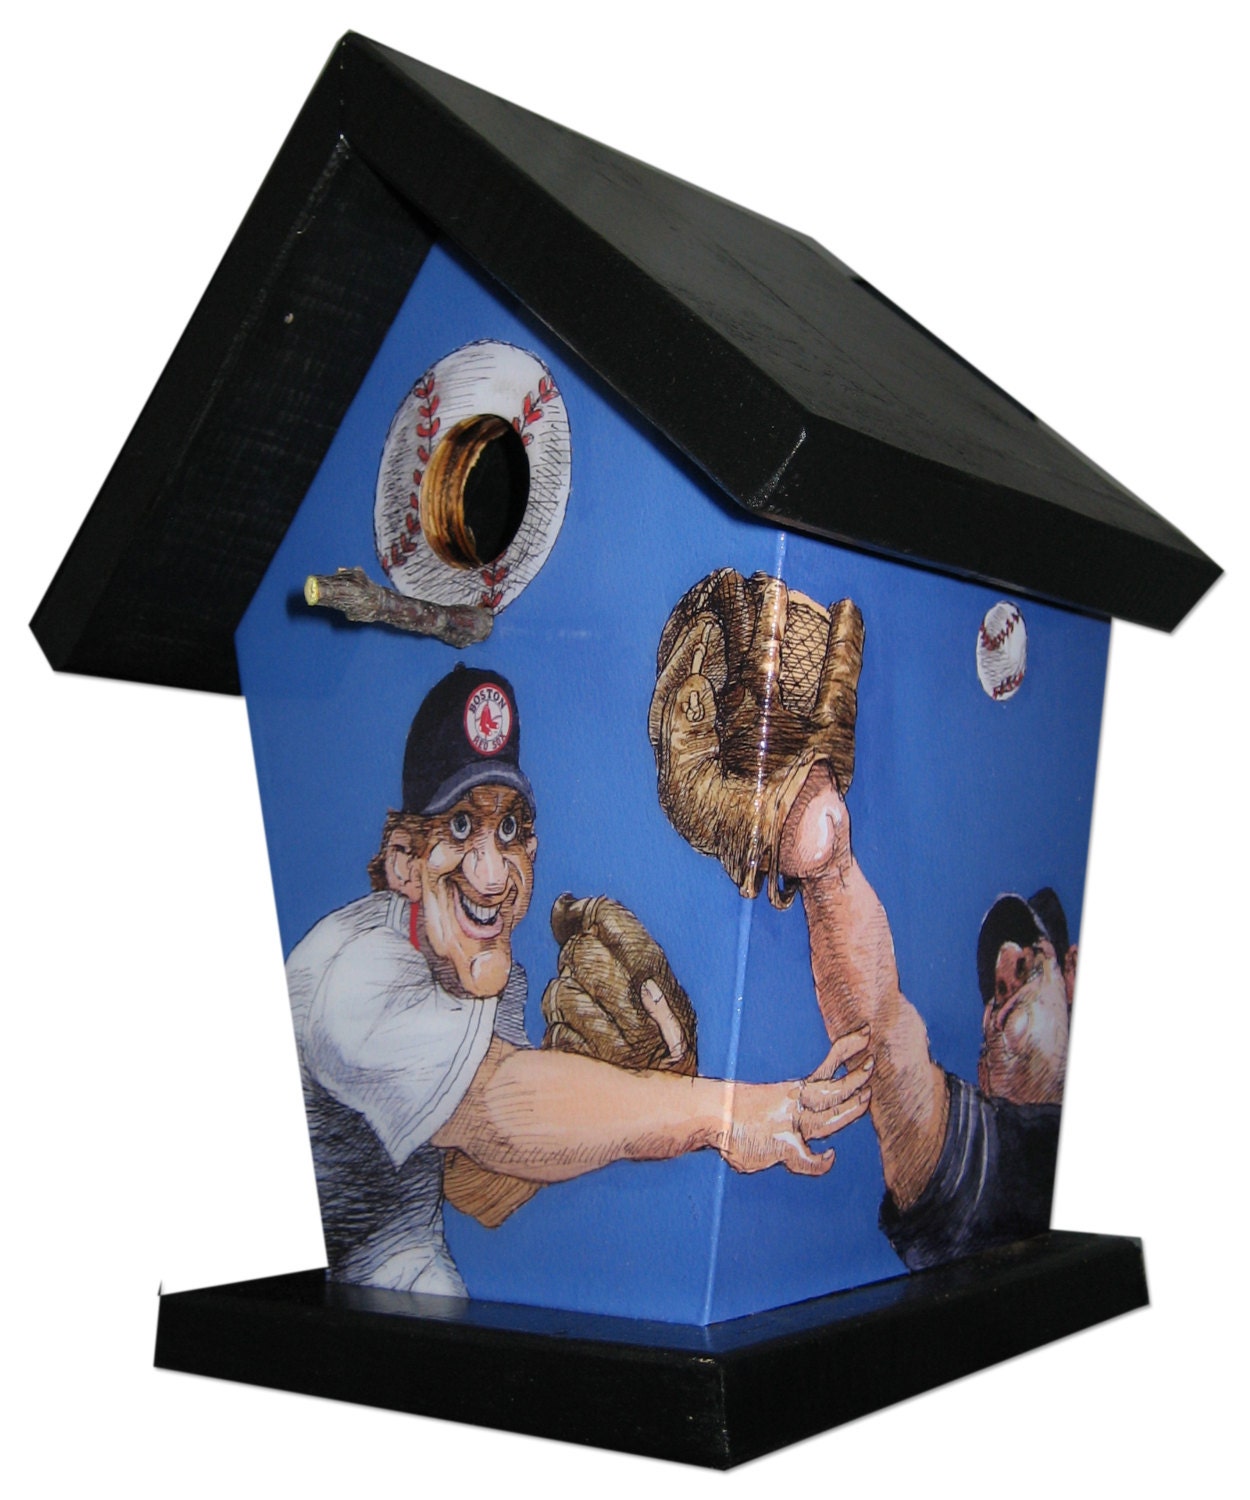 Boston Red Sox Cartoon Birdhouse